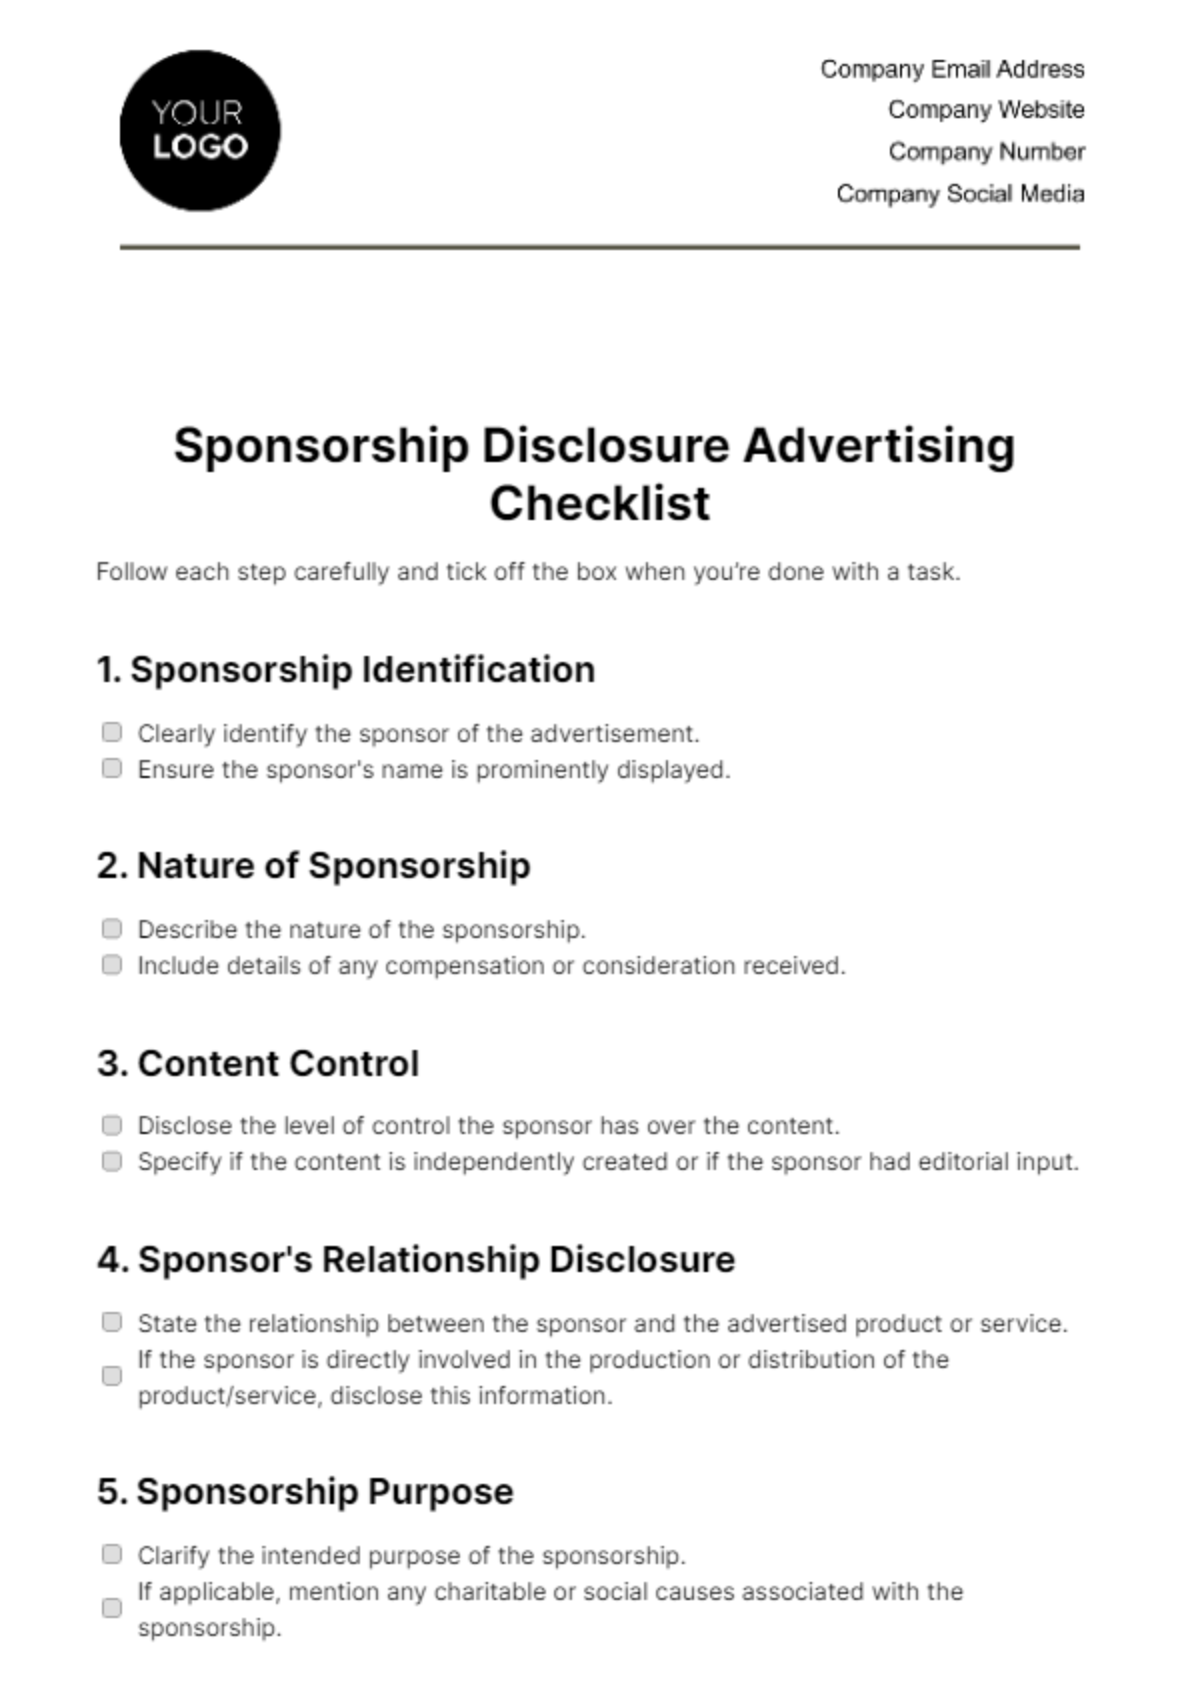 Sponsorship Disclosure Advertising Checklist Template